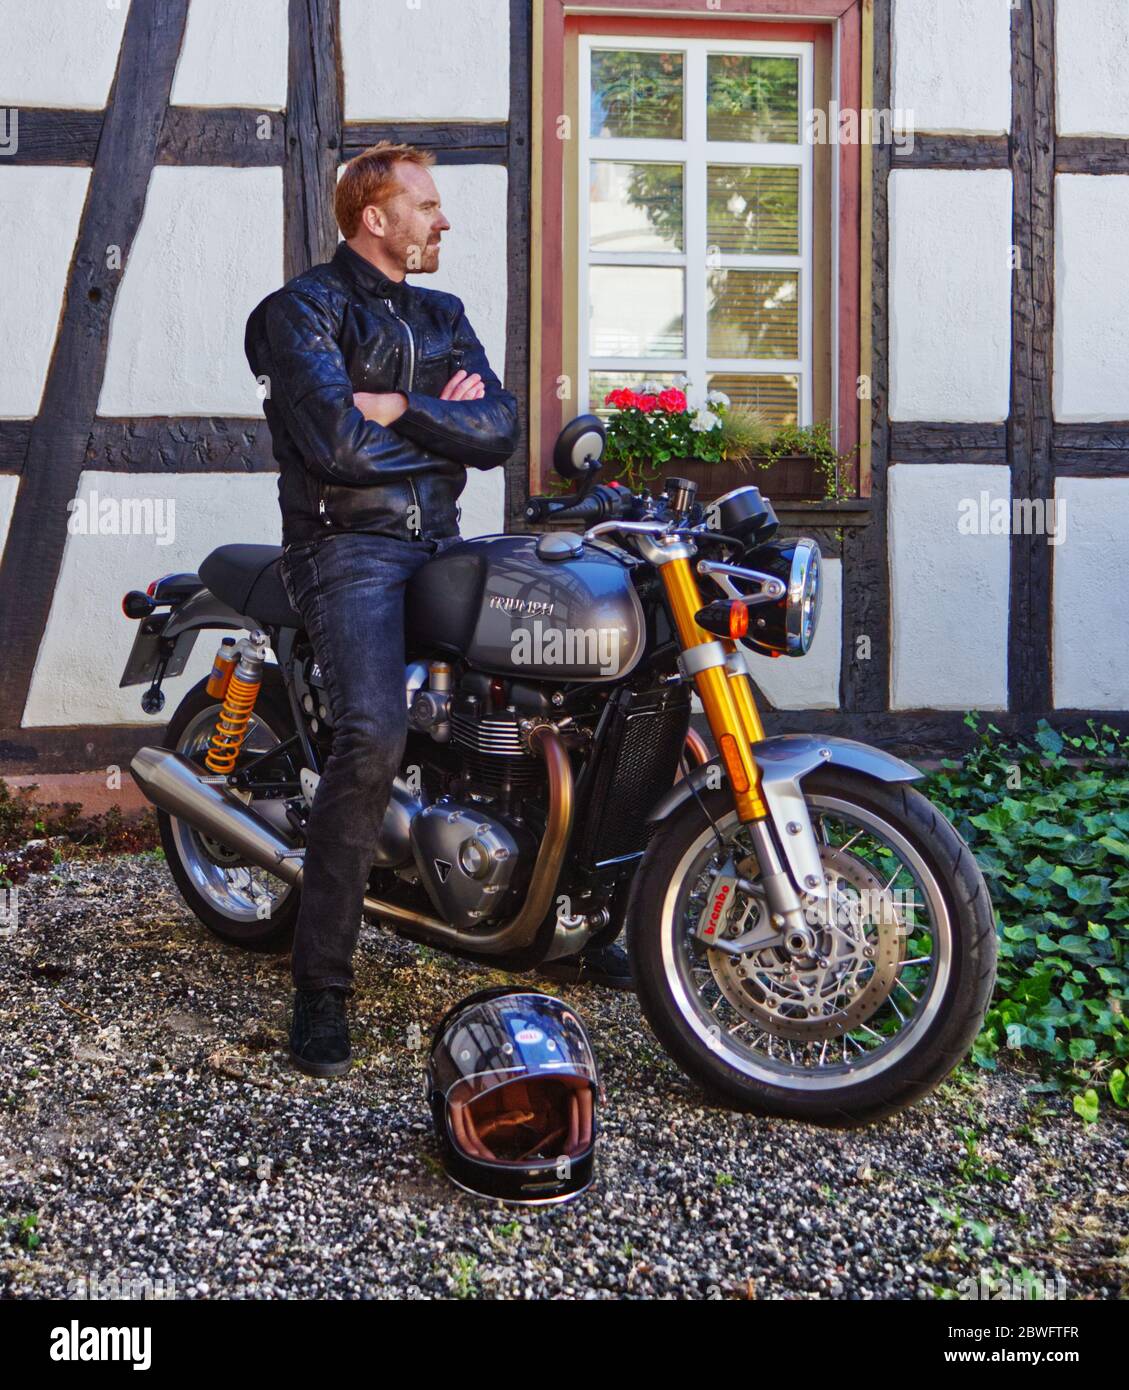 Bicker in black leather jaket on his bike Stock Photo